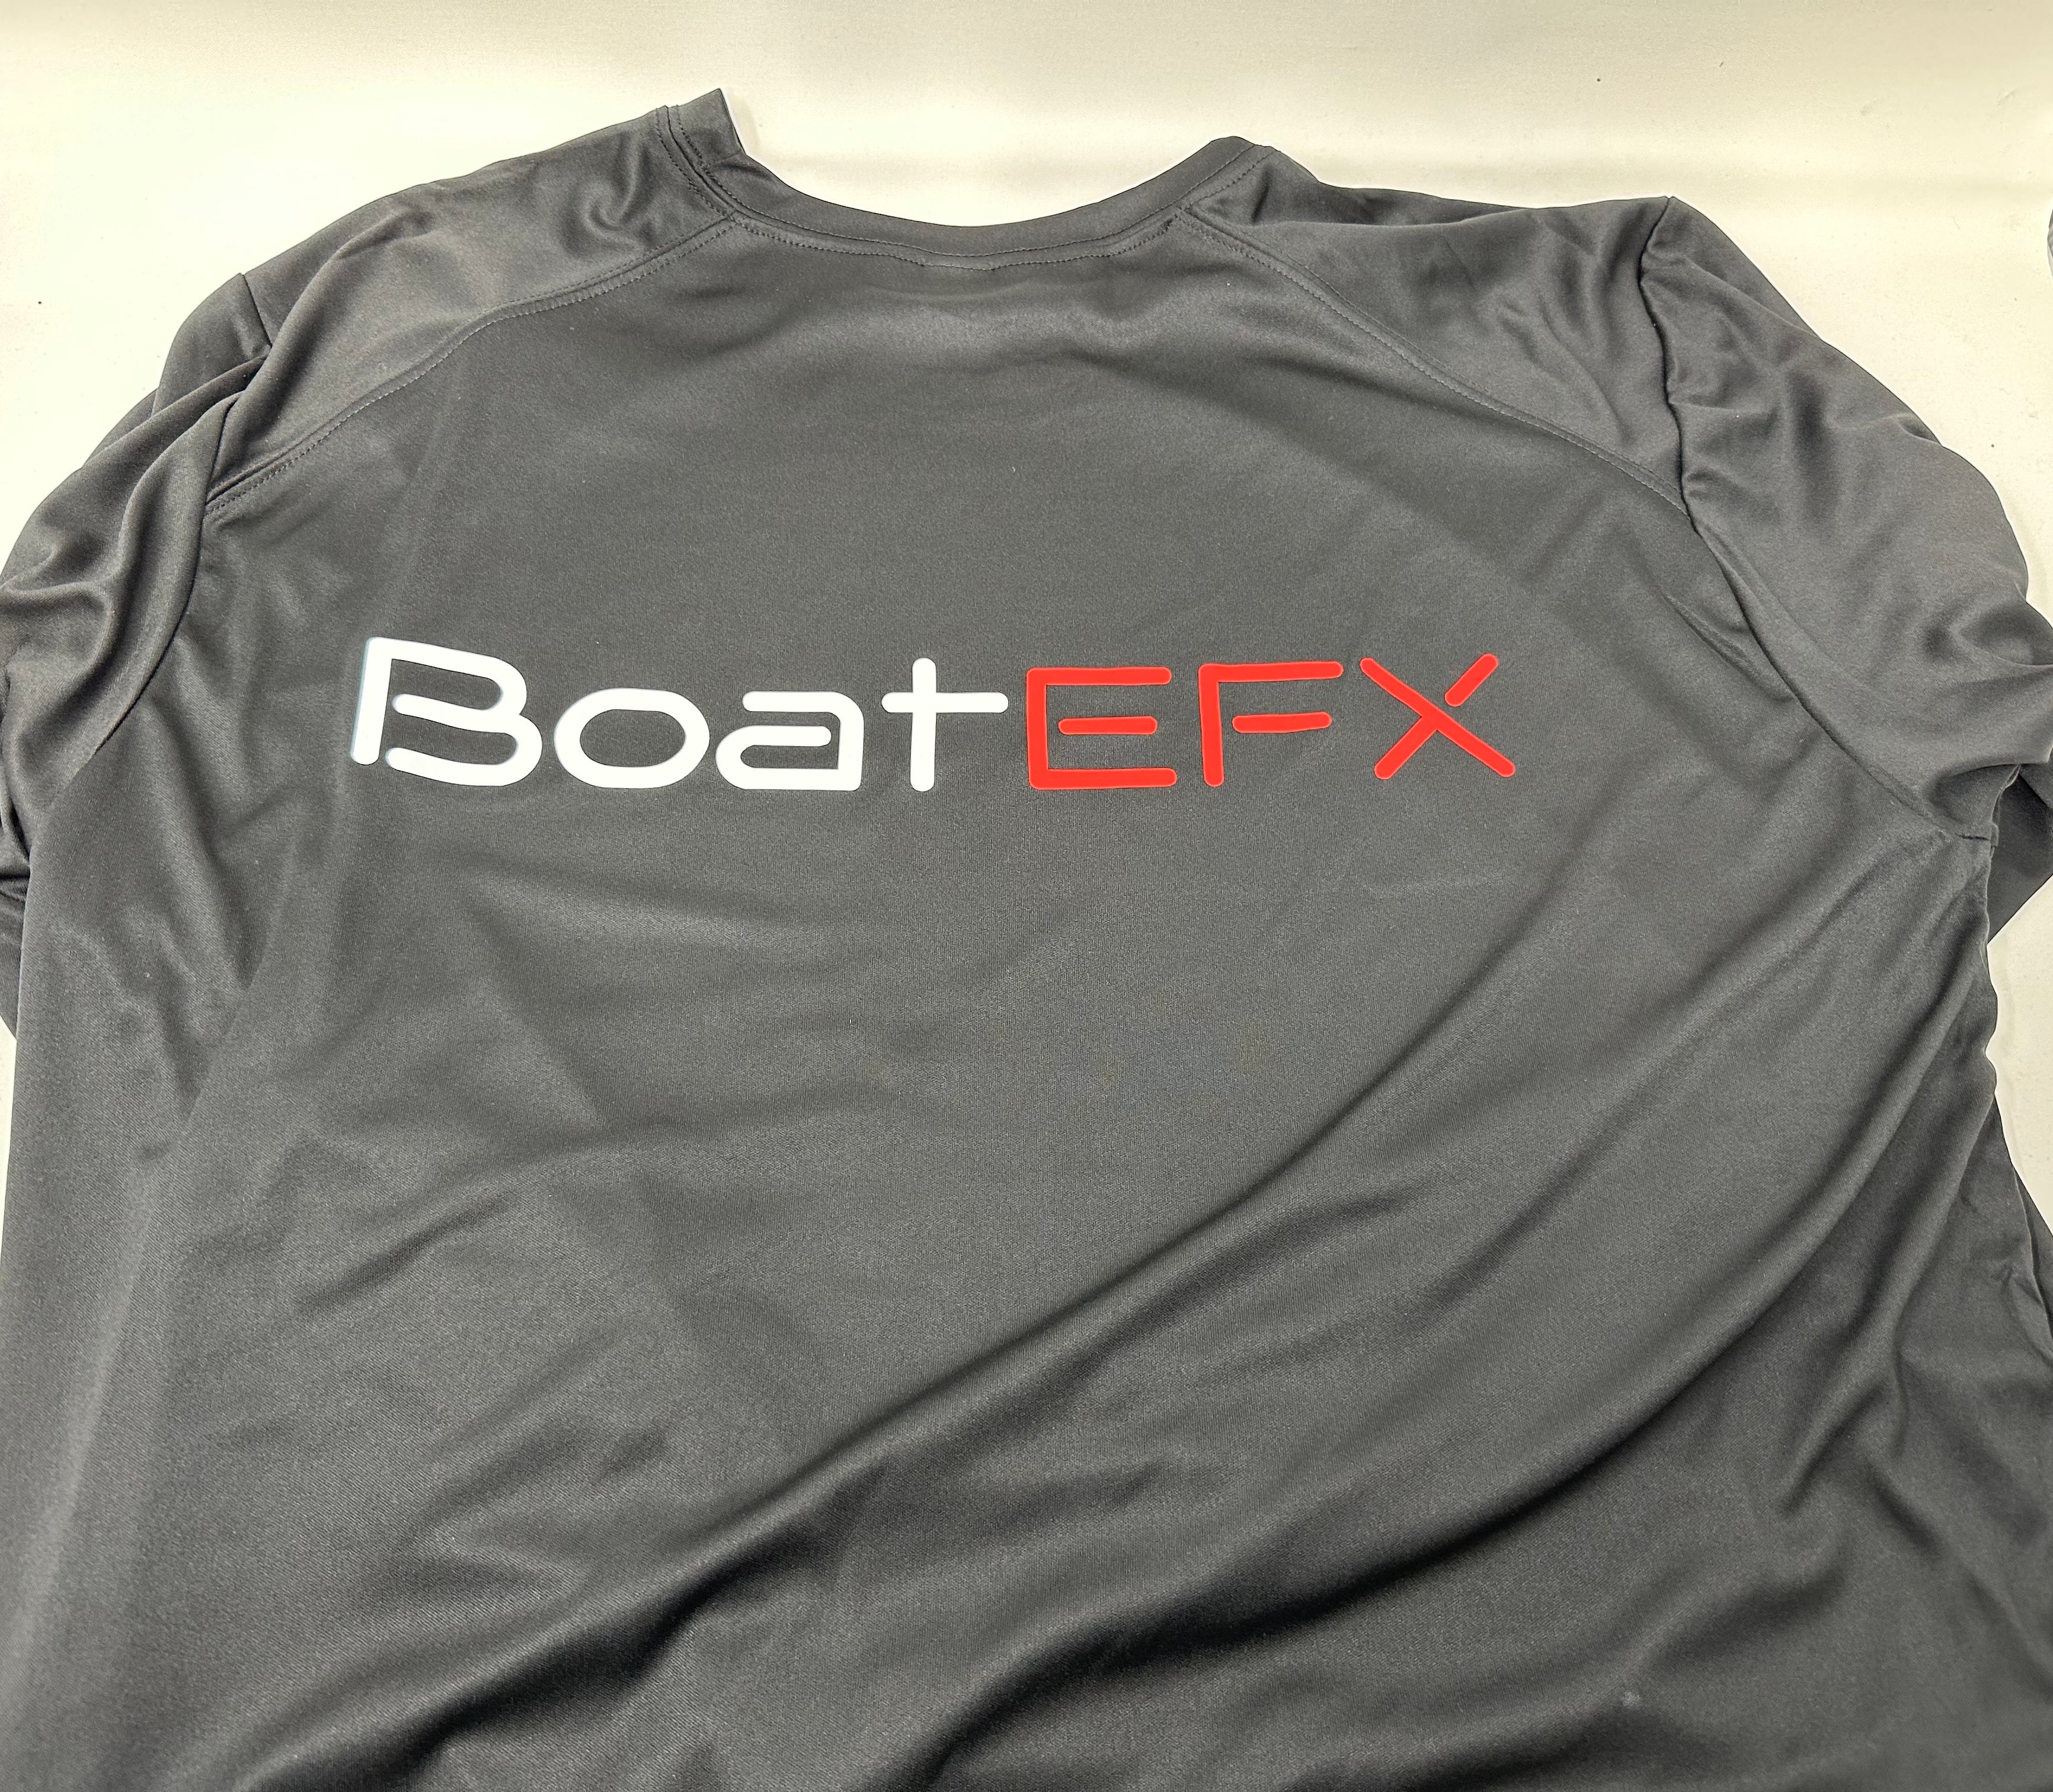 BoatEFX Long Sleeve - BoatEFX